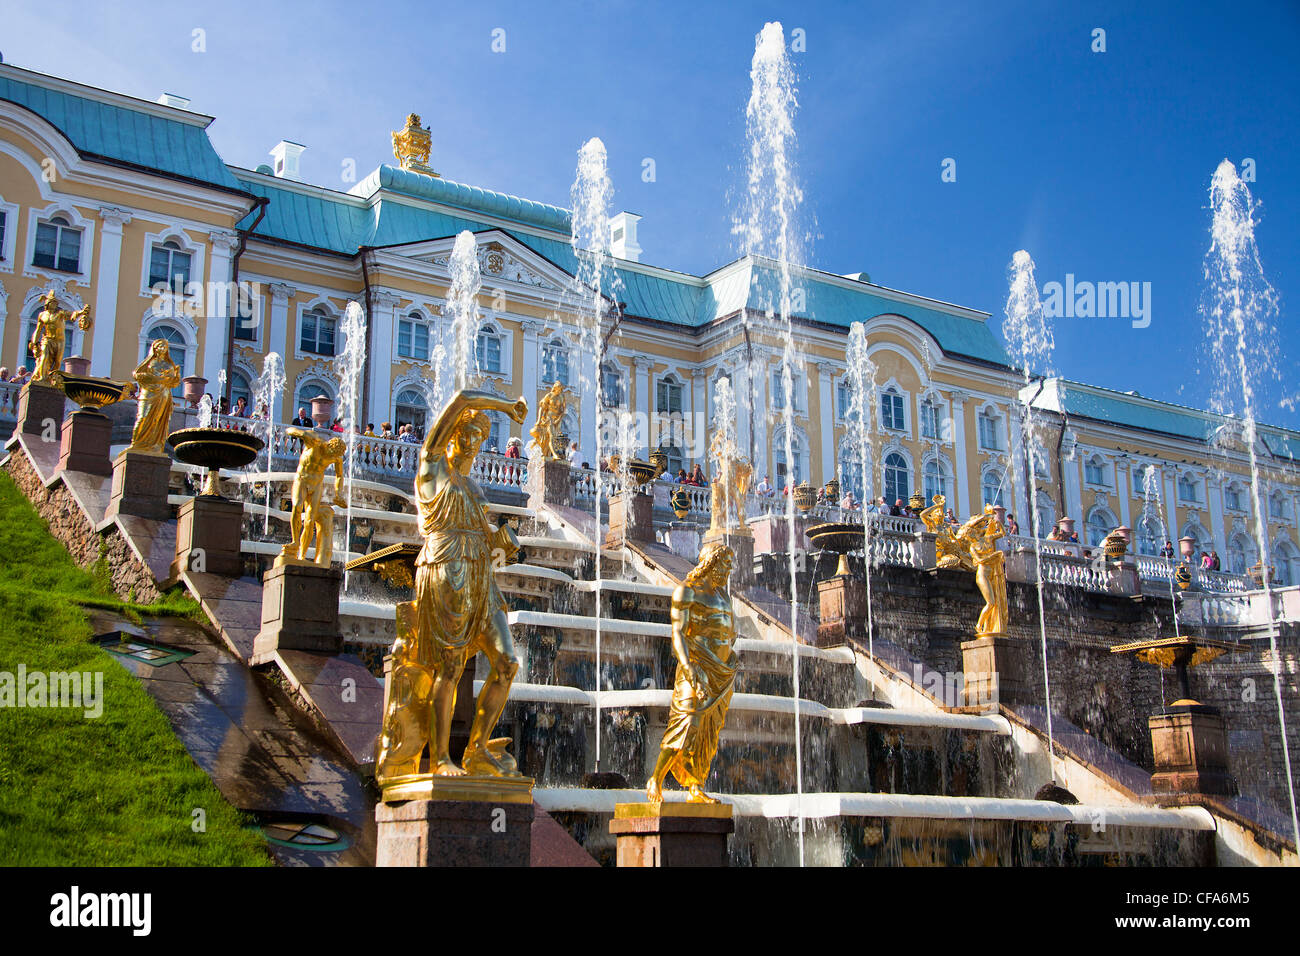 Russia, Europa, San Pietroburgo, Peterburg, città di Peterhof Palace, il Summer Palace, patrimonio mondiale, parco, fontana, statue Foto Stock